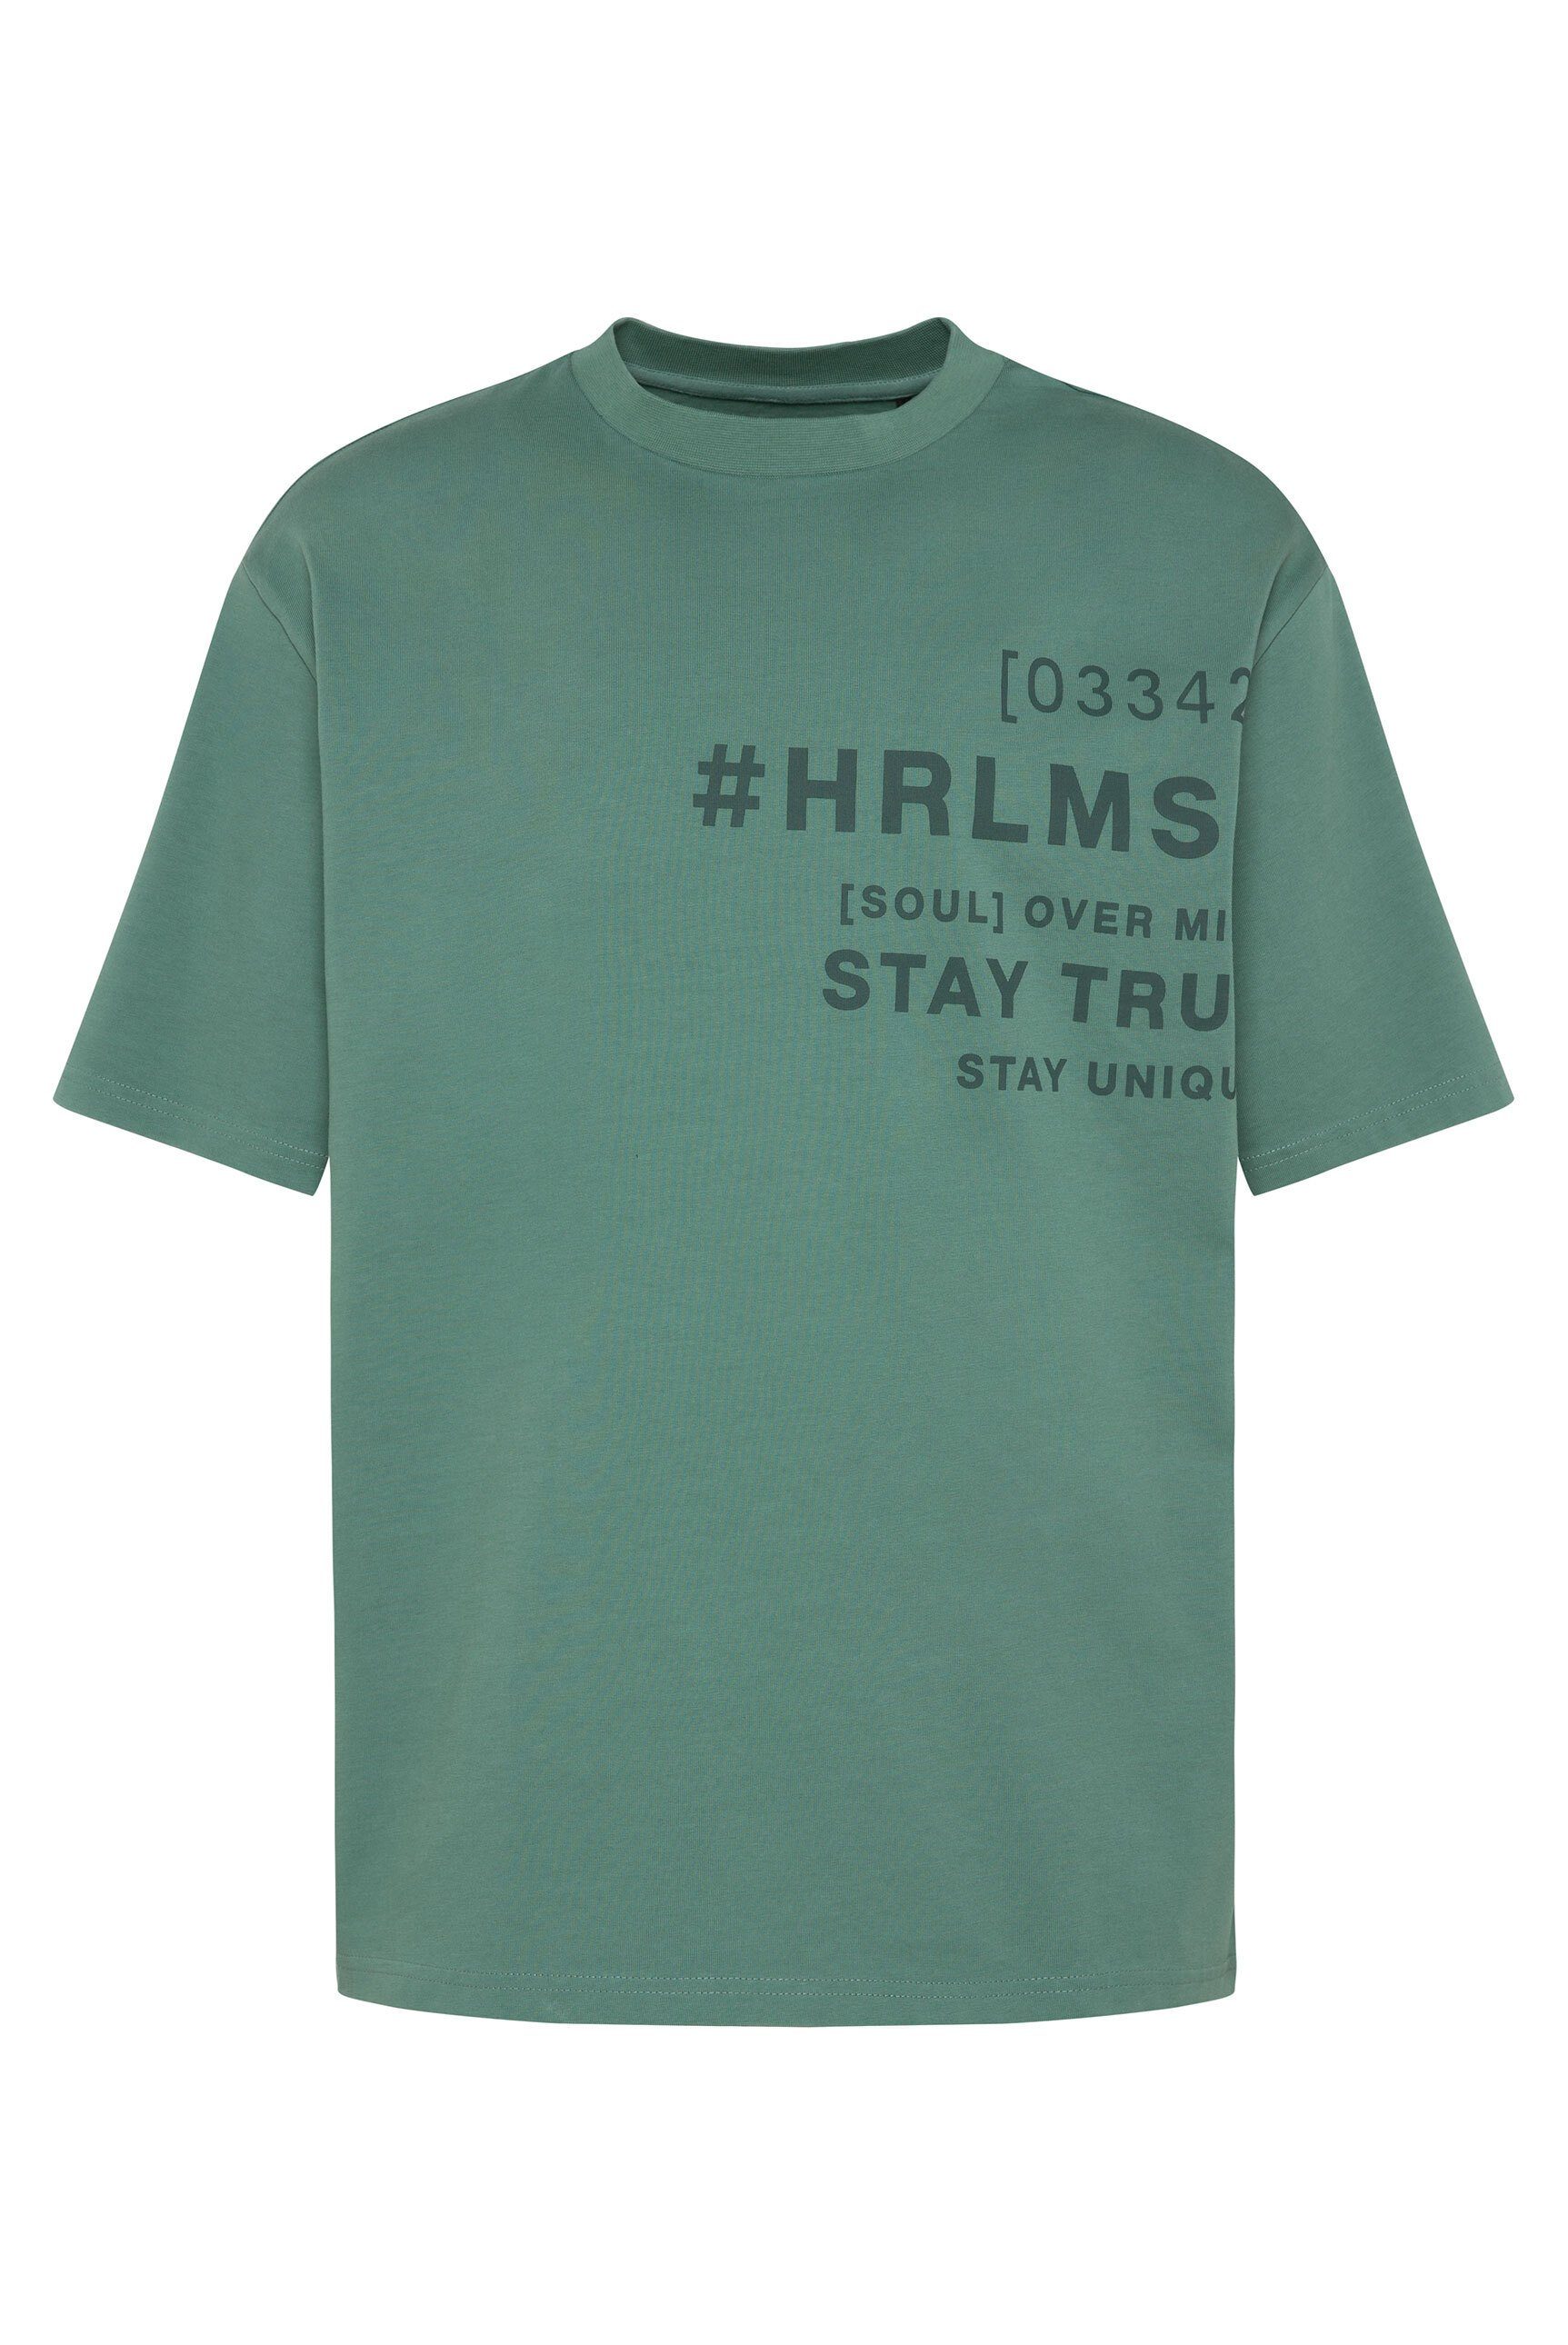 Harlem GOTS Soul T-Shirt, organic 1018028 mit Logodruck, Rundhalsshirt CU zertifiziertes